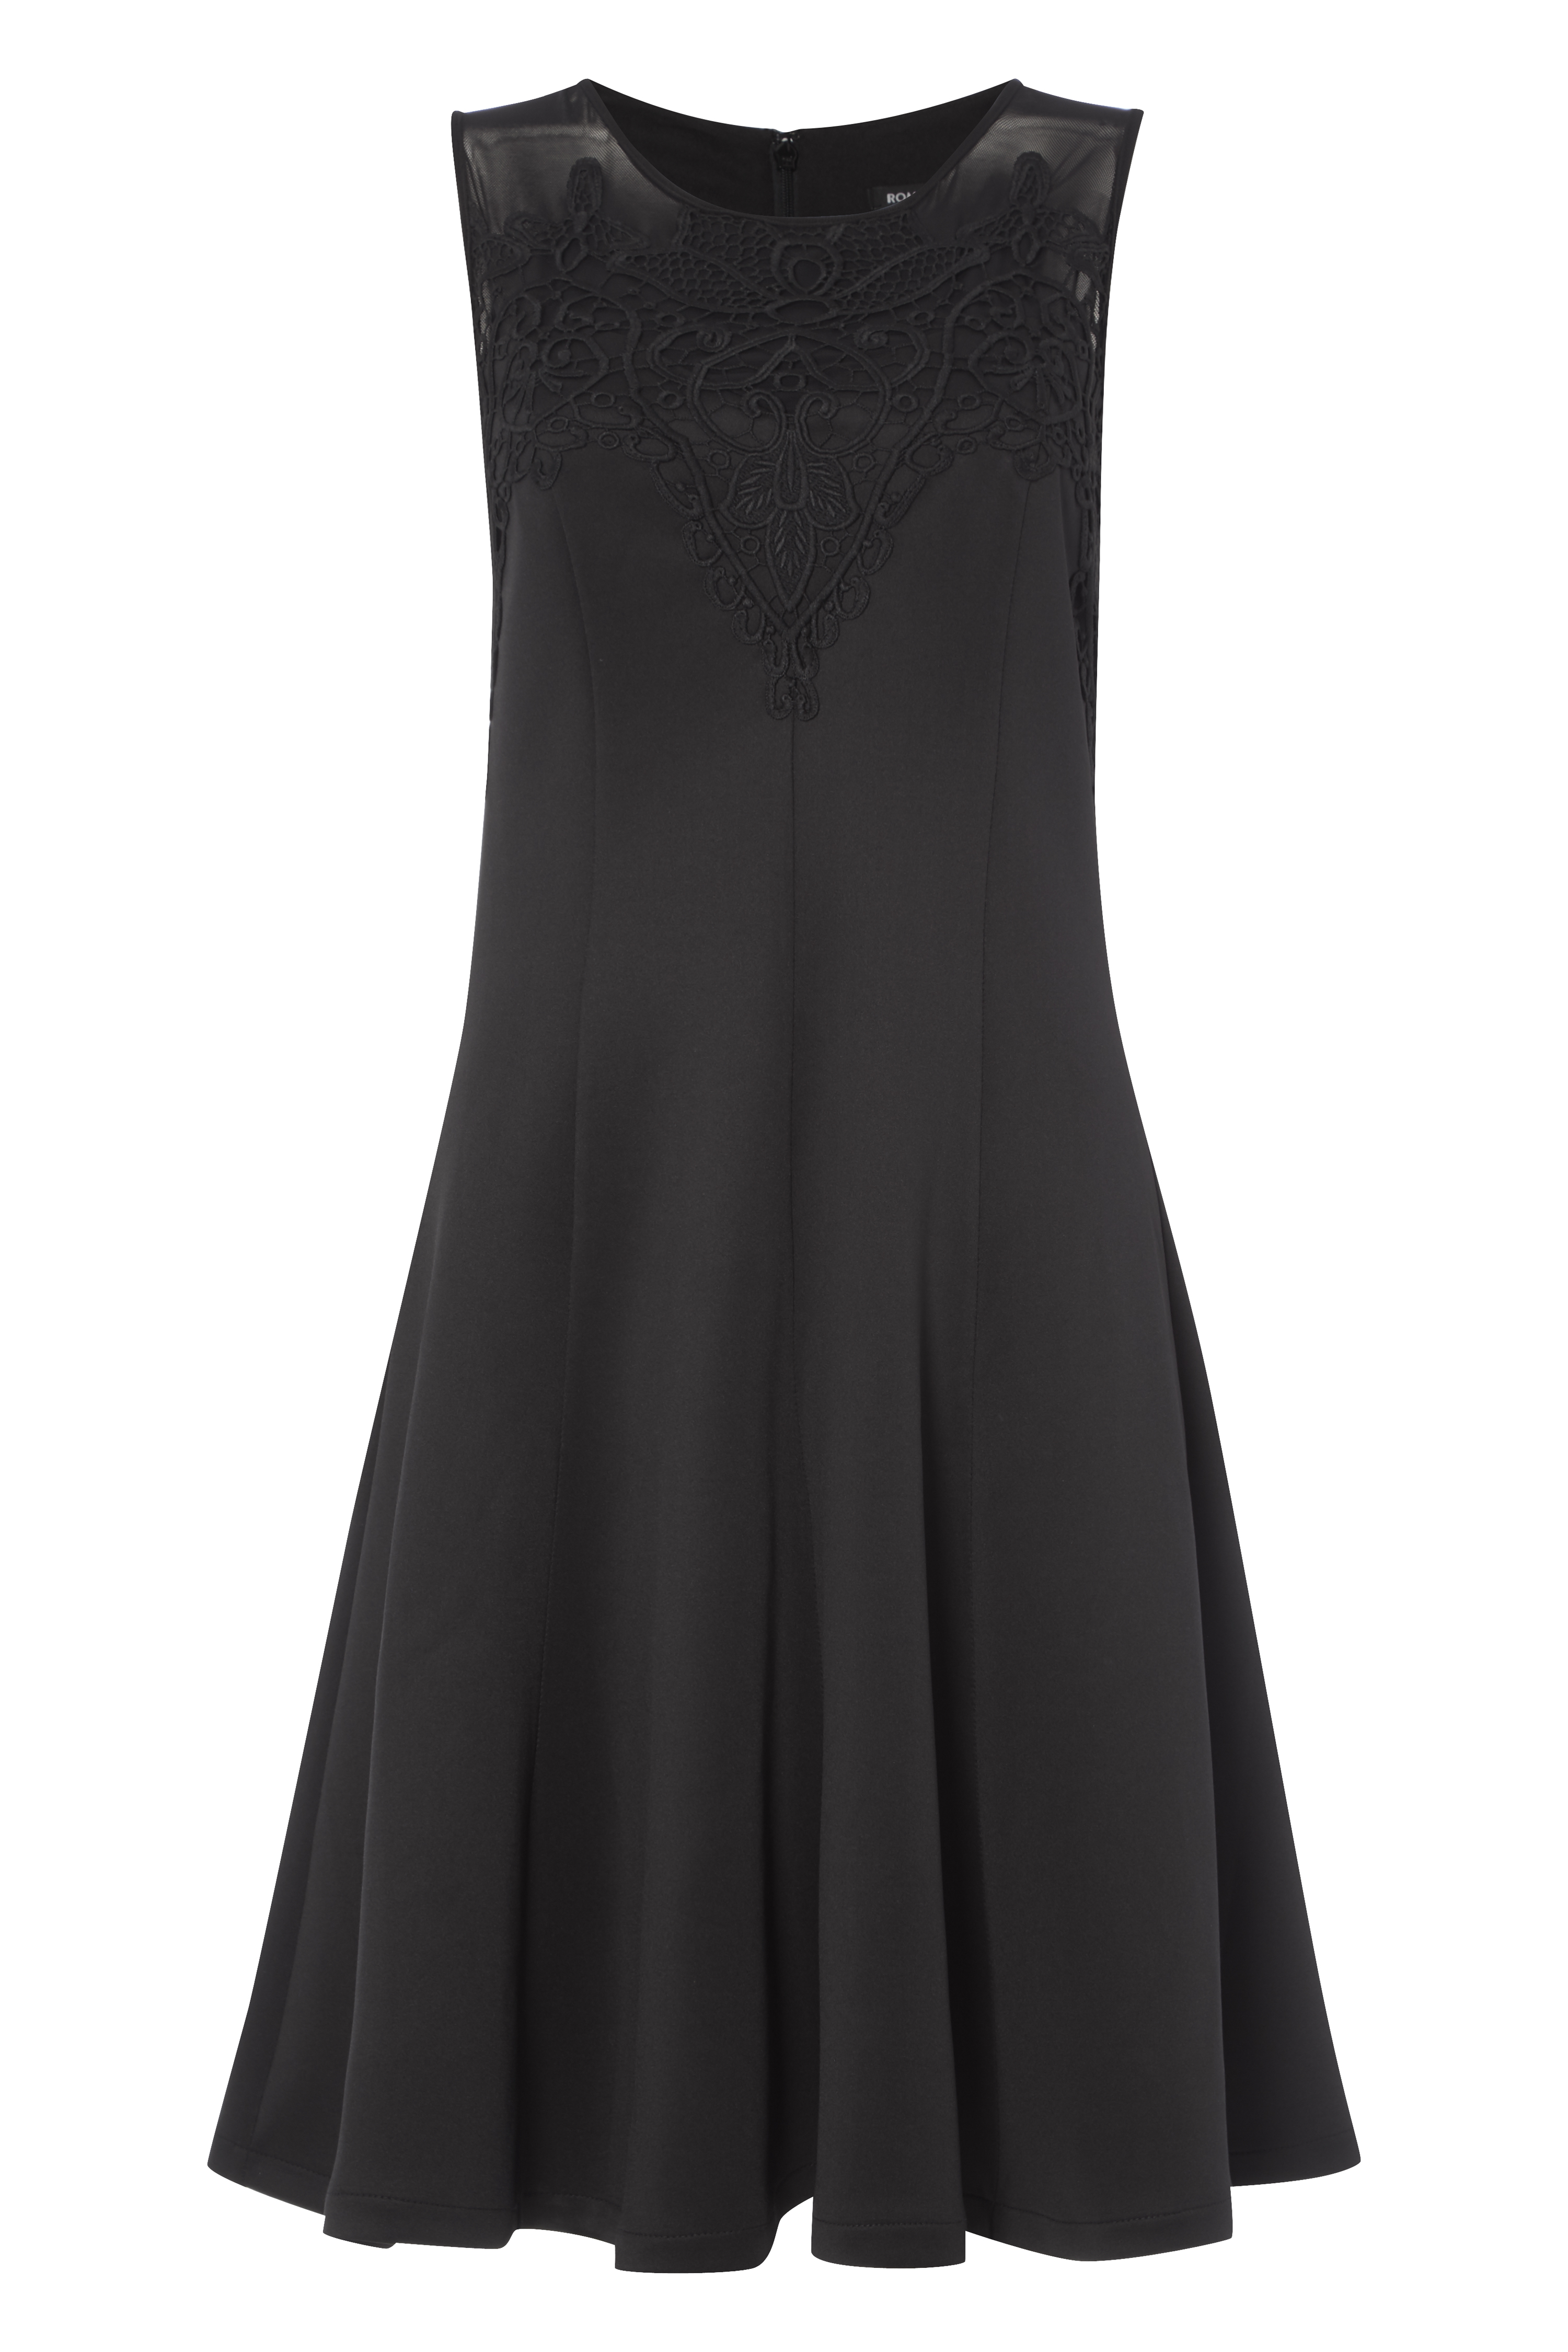 Black Lace Yoke Skater Dress, Image 5 of 5